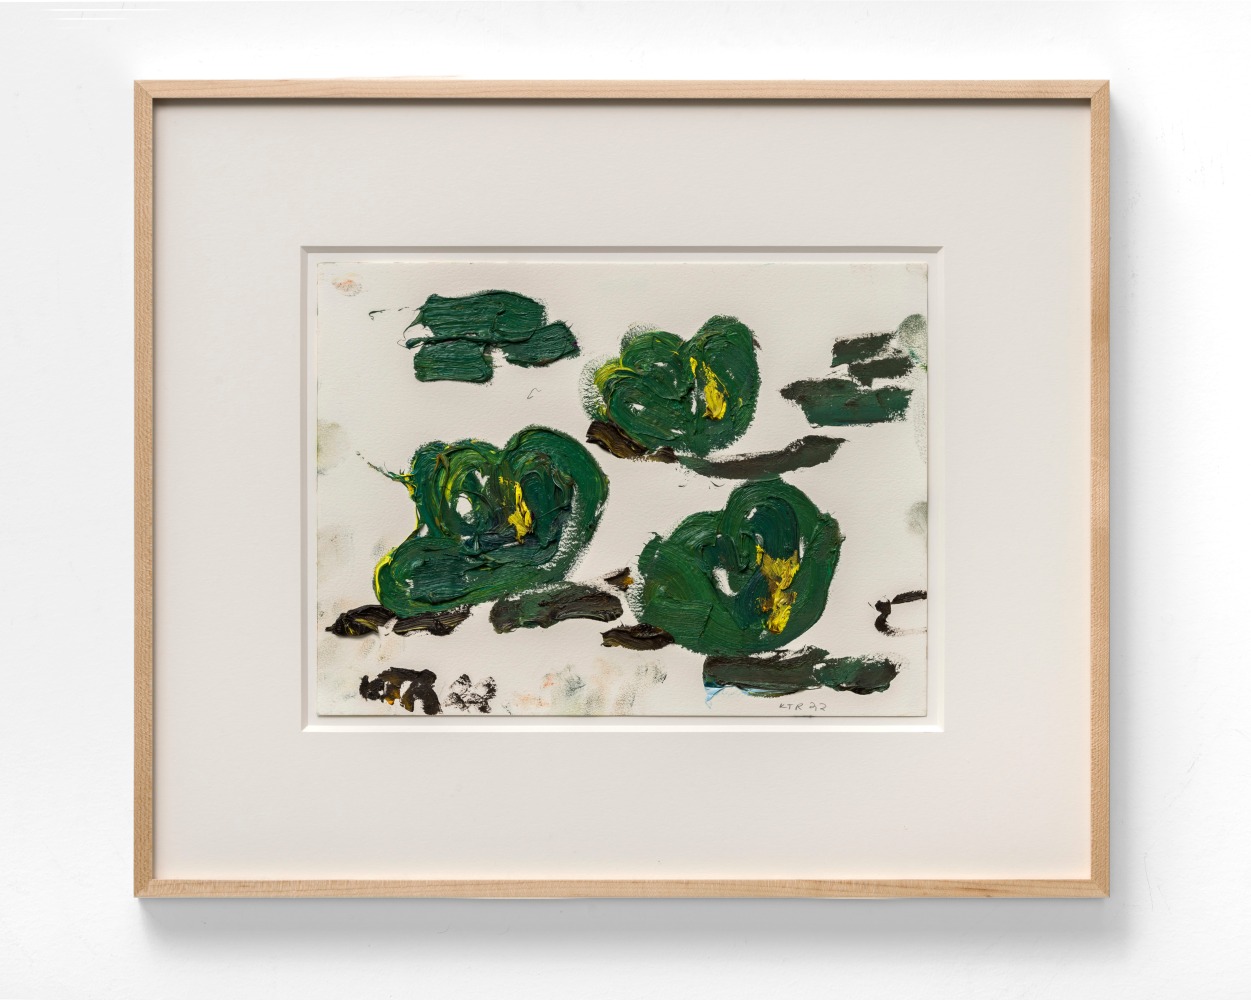 Ken Taylor Reynaga
Sombrero (leaf e), 2022
Oil on paper
9h x 12w in
22.86h x 30.48w cm